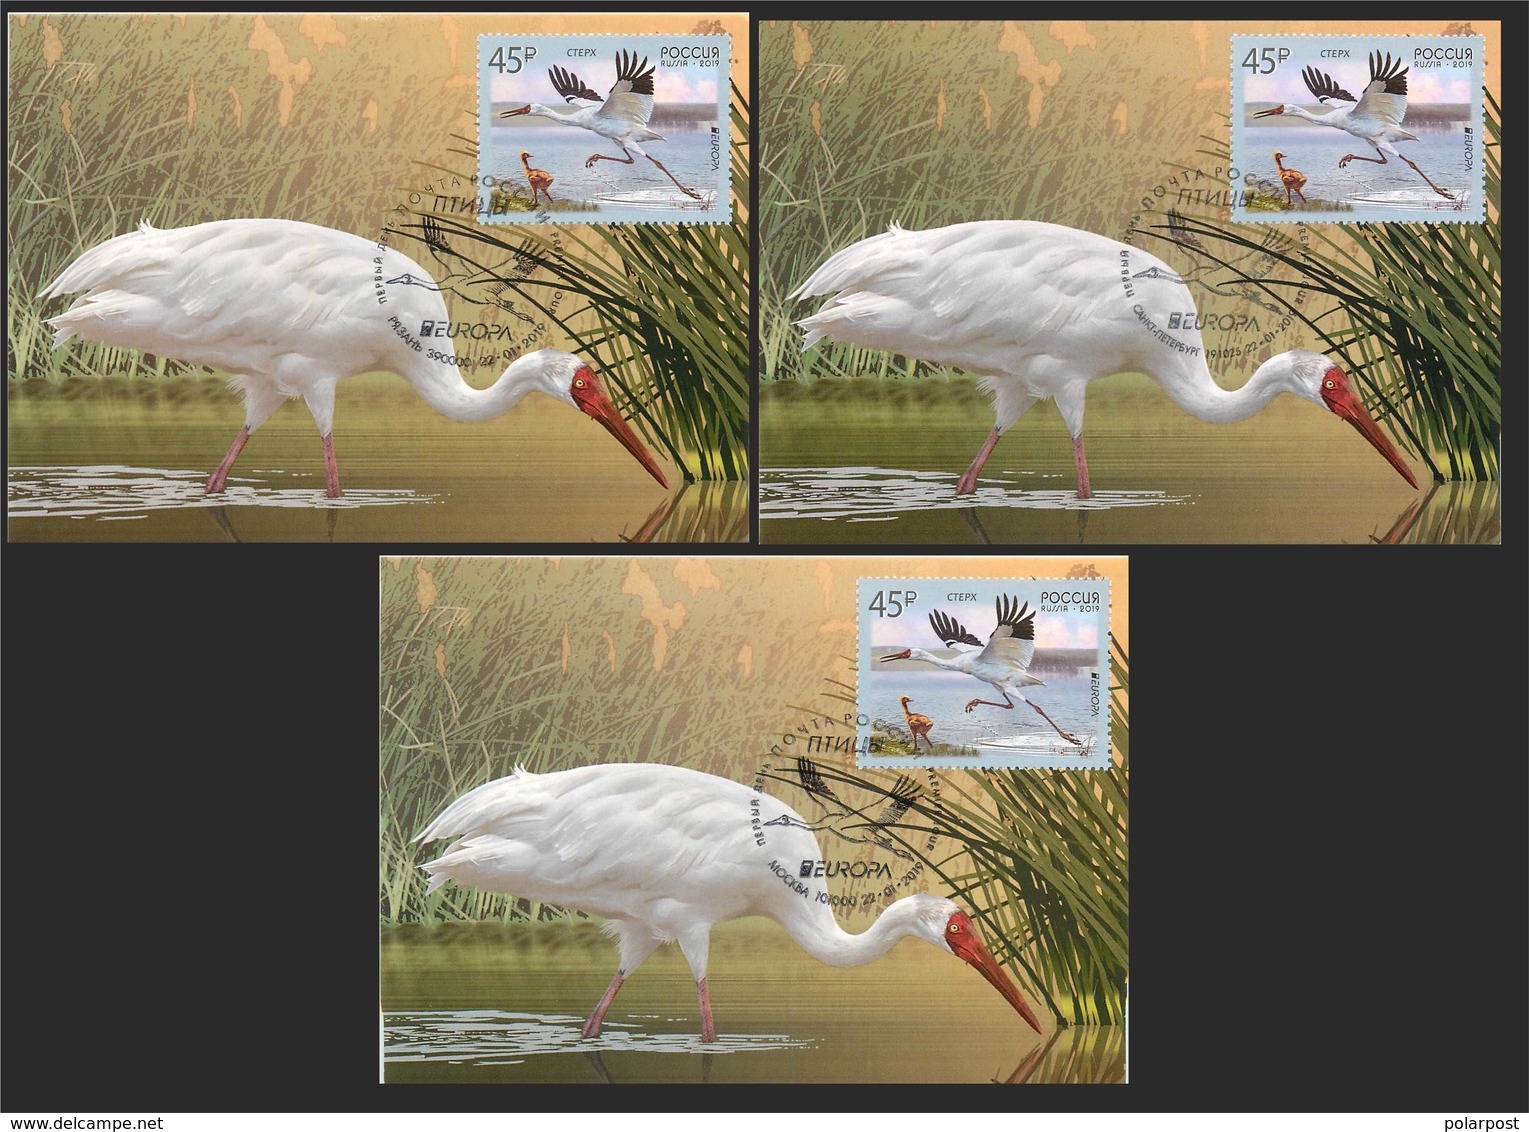 RUSSIA 2019 2436. "Europe" Program Issues. Birds. Siberian Cranes (POST OFFICE: Moscow, Ryazan, St. Petersburg) - Storks & Long-legged Wading Birds